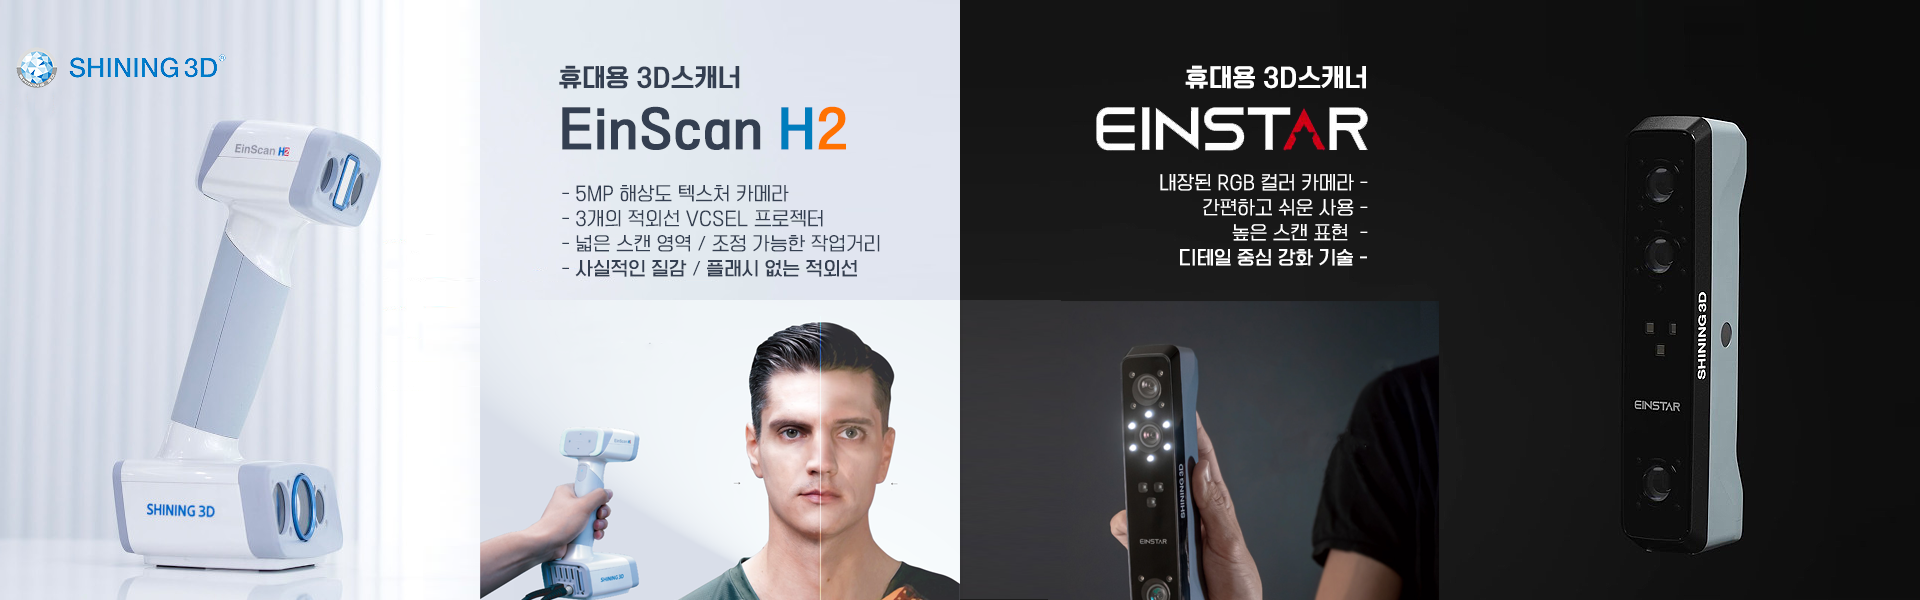 3D스캐너 샤이닝3D 아인스타 3D Scanner Shining3D Einstar 한국파트너 덕유항공